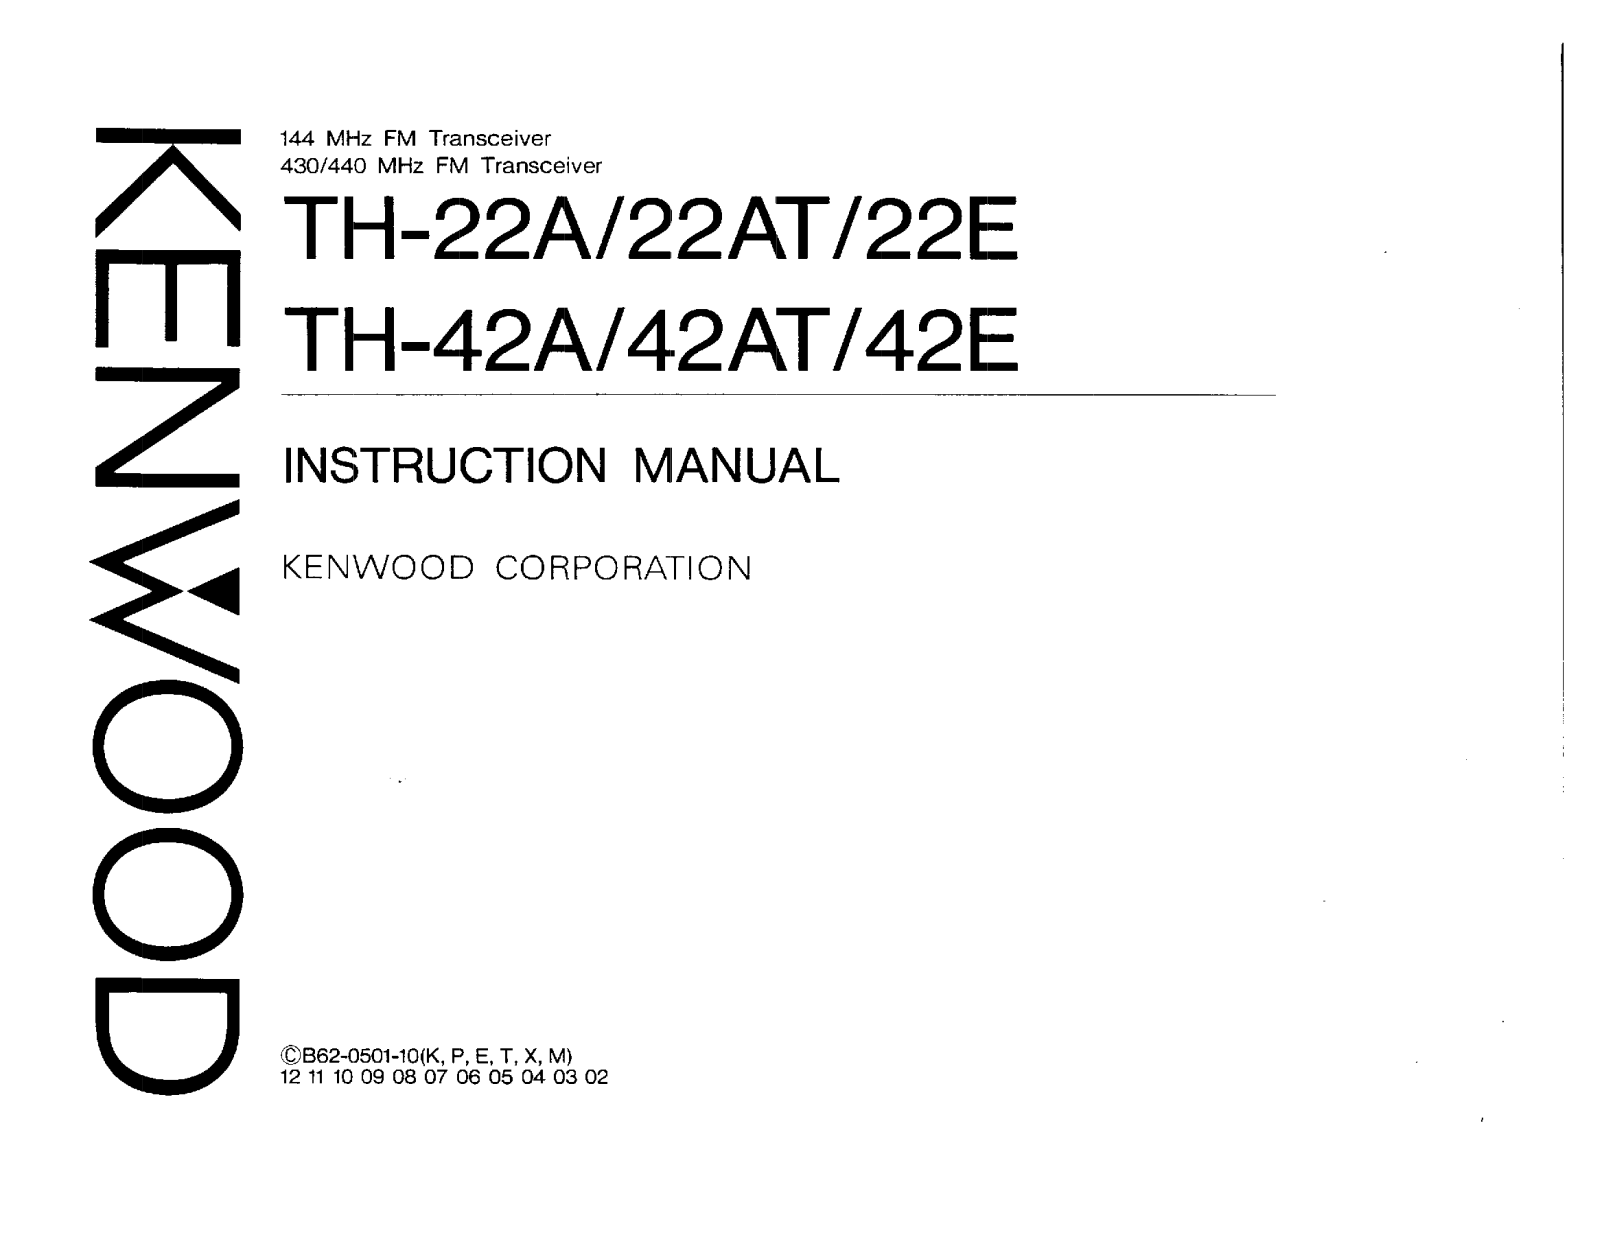 Kenwood TH-22AT User Manual